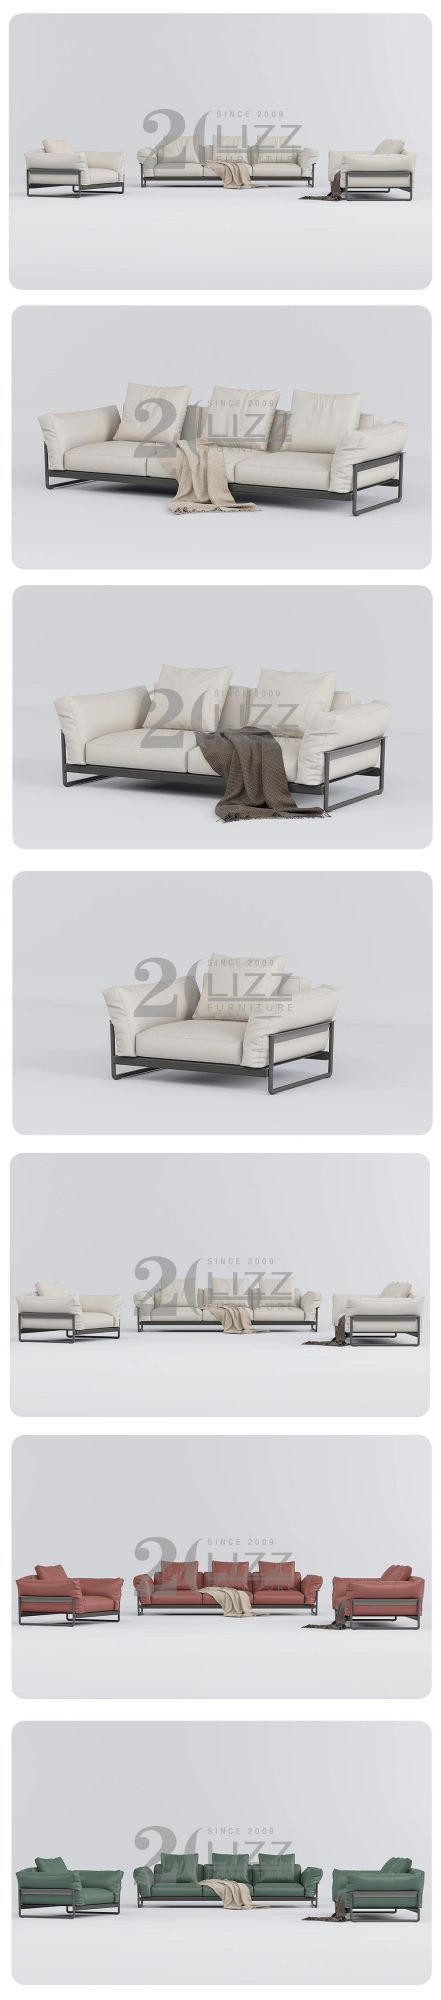 High End Quality Modern Leisure Home Furniture Italian Design Living Room Simple Office White Fabric Sofa